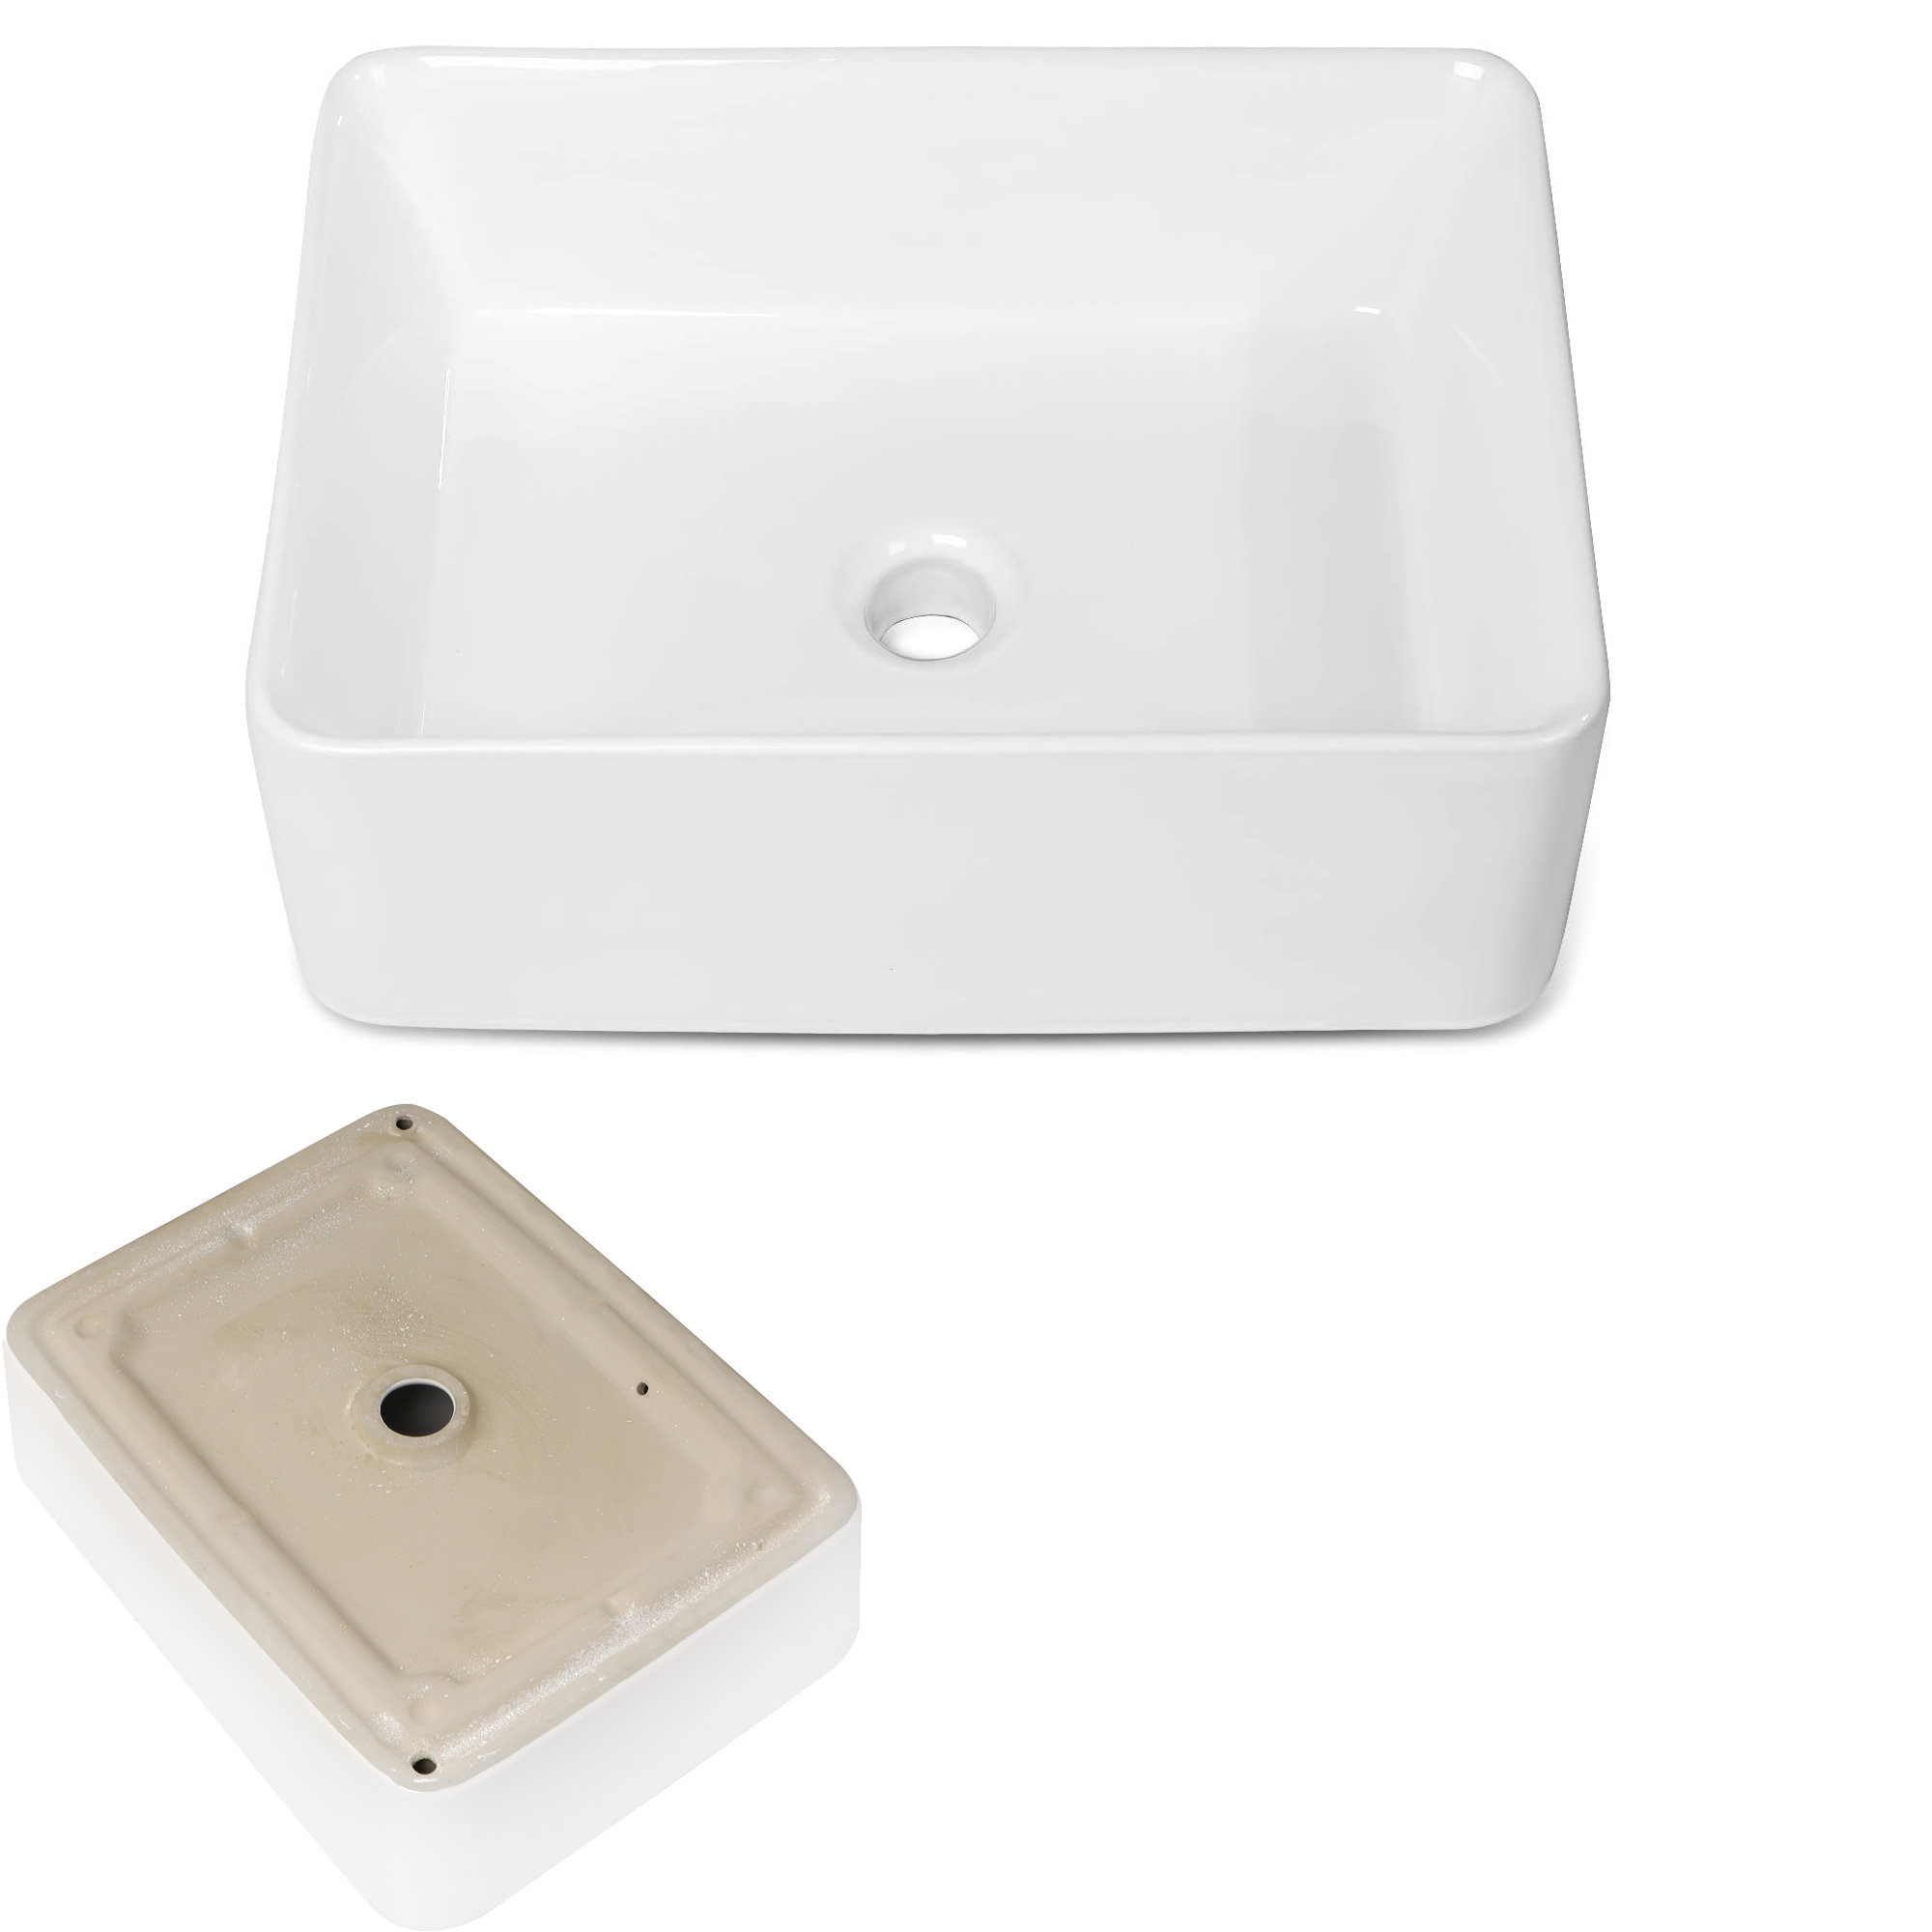 Ochine 15'' Ceramic Rectangular Vessel Bathroom Sink